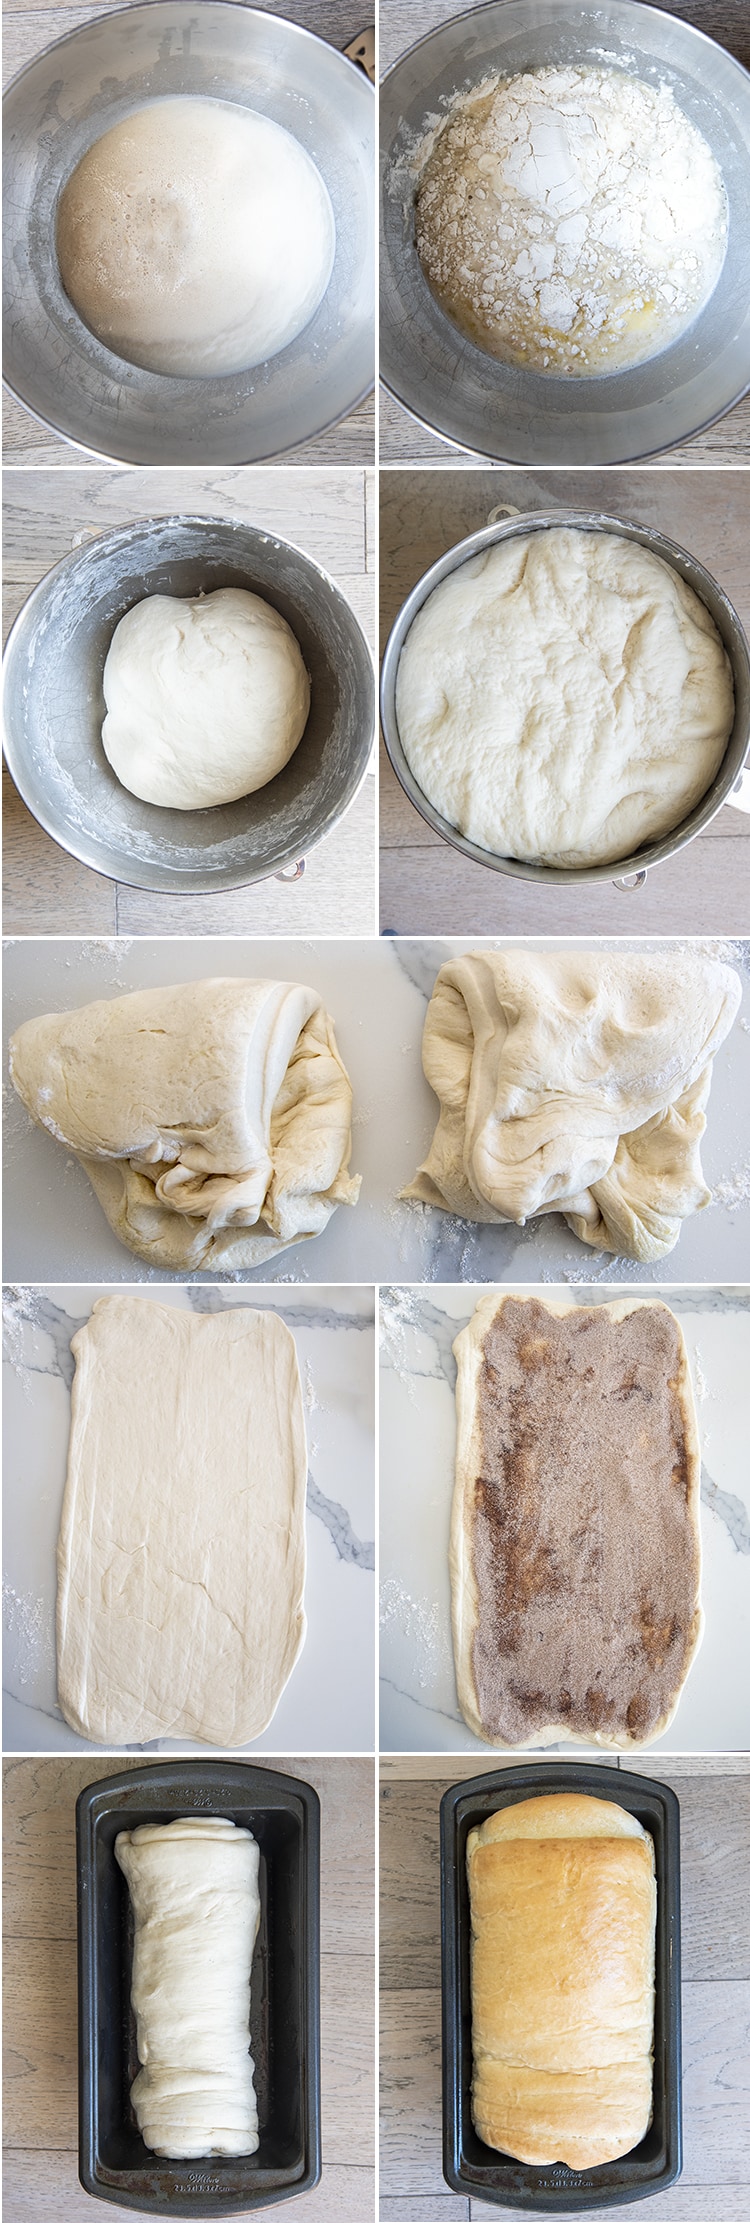 Step by step photos how to make cinnamon swirl bread